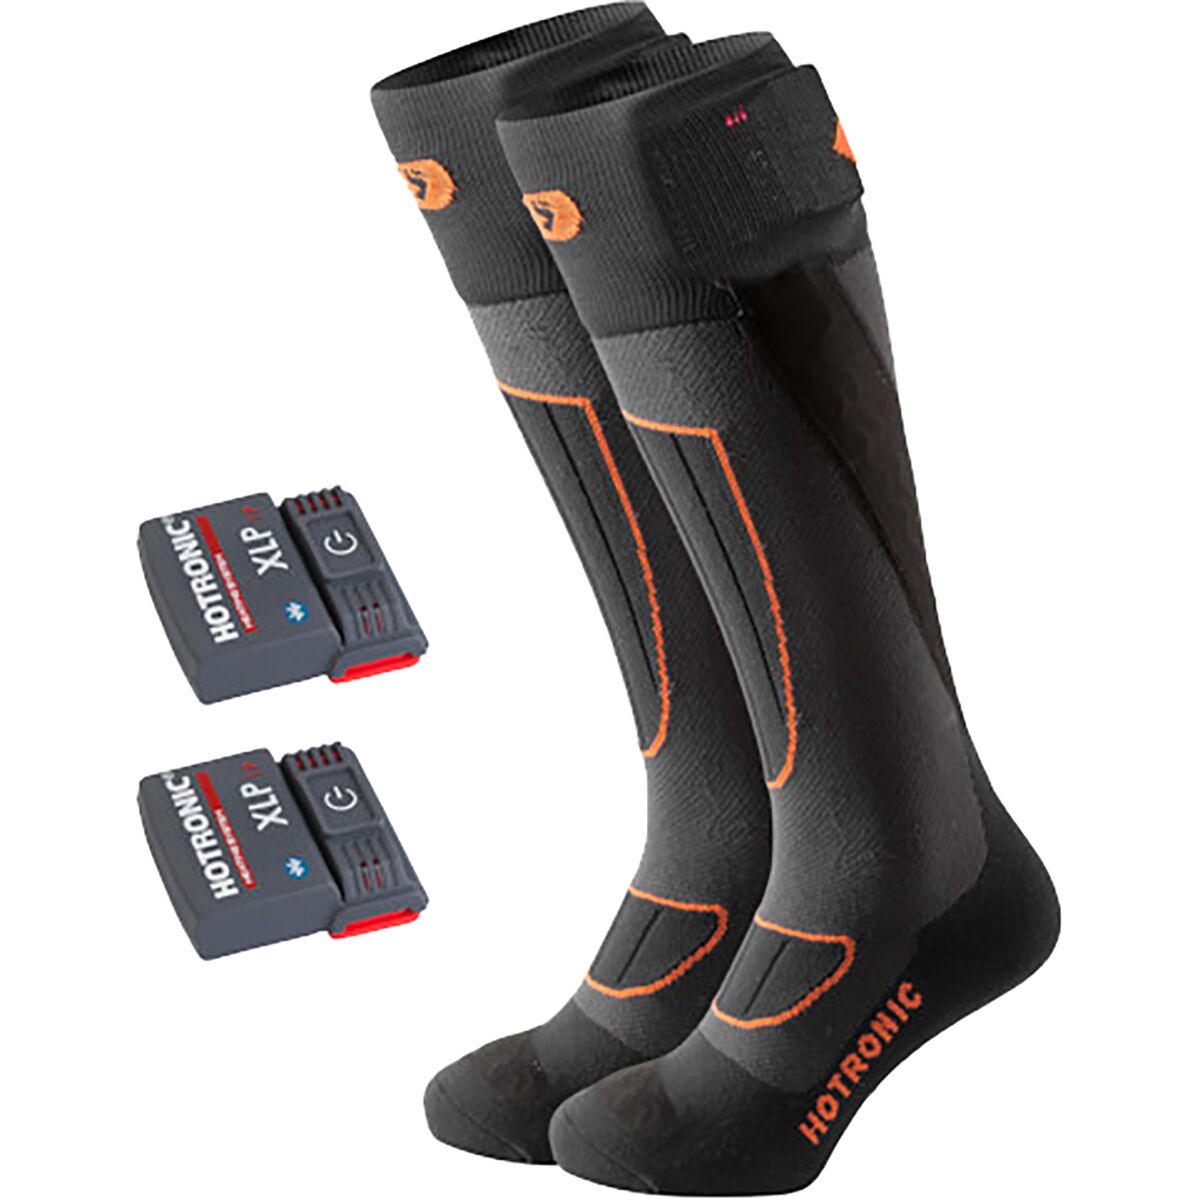 Hotronic XLP 1P BT Surround Comfort Heat Sock Set Black/Orange